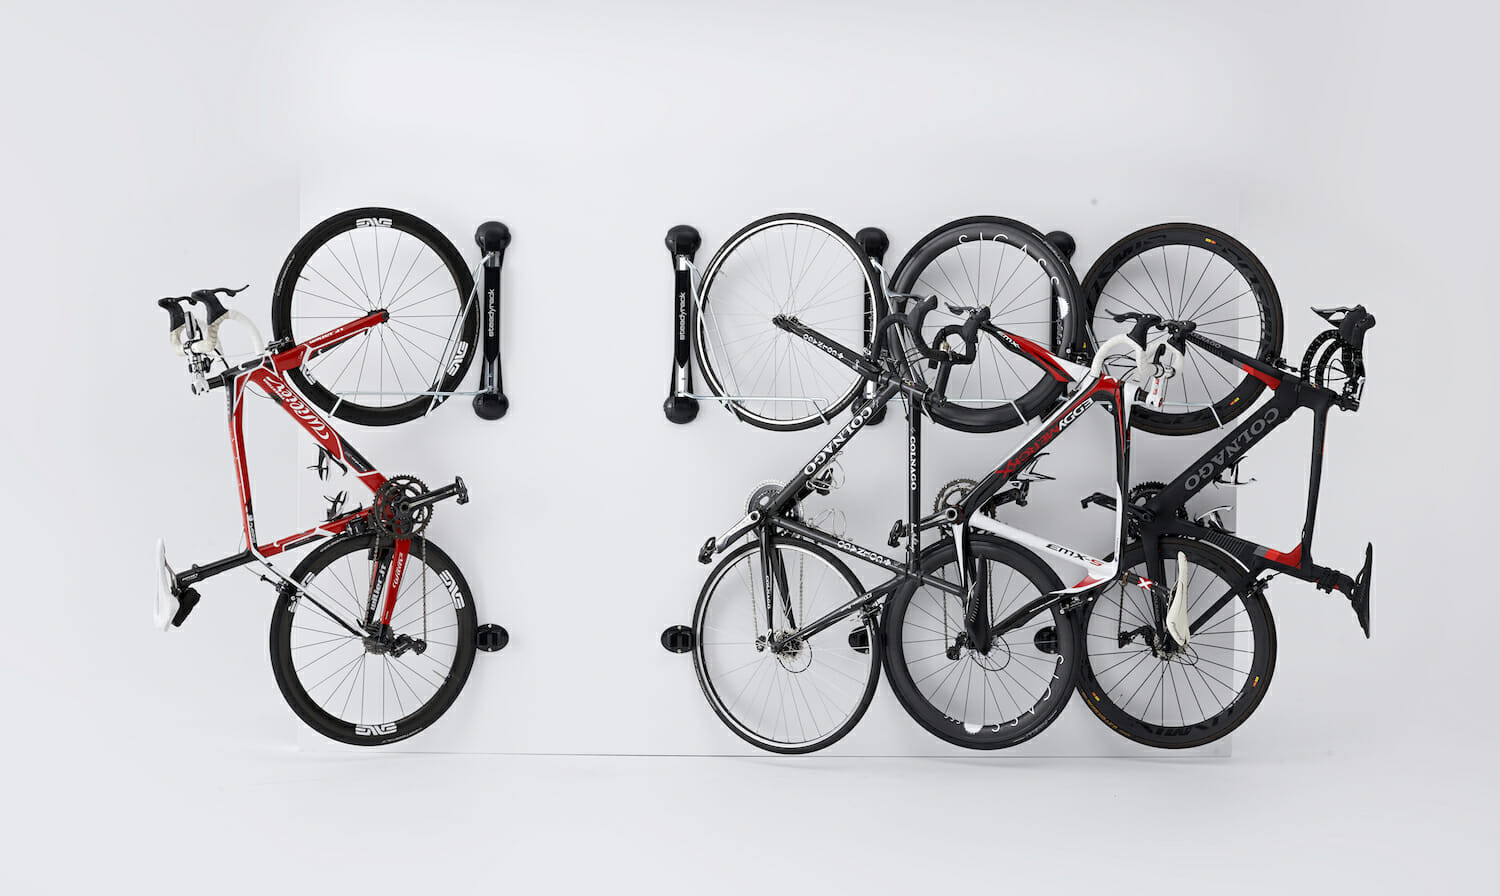 Best ideas about Bike Racks Garage Storage
. Save or Pin Garage Bike Racks Now.